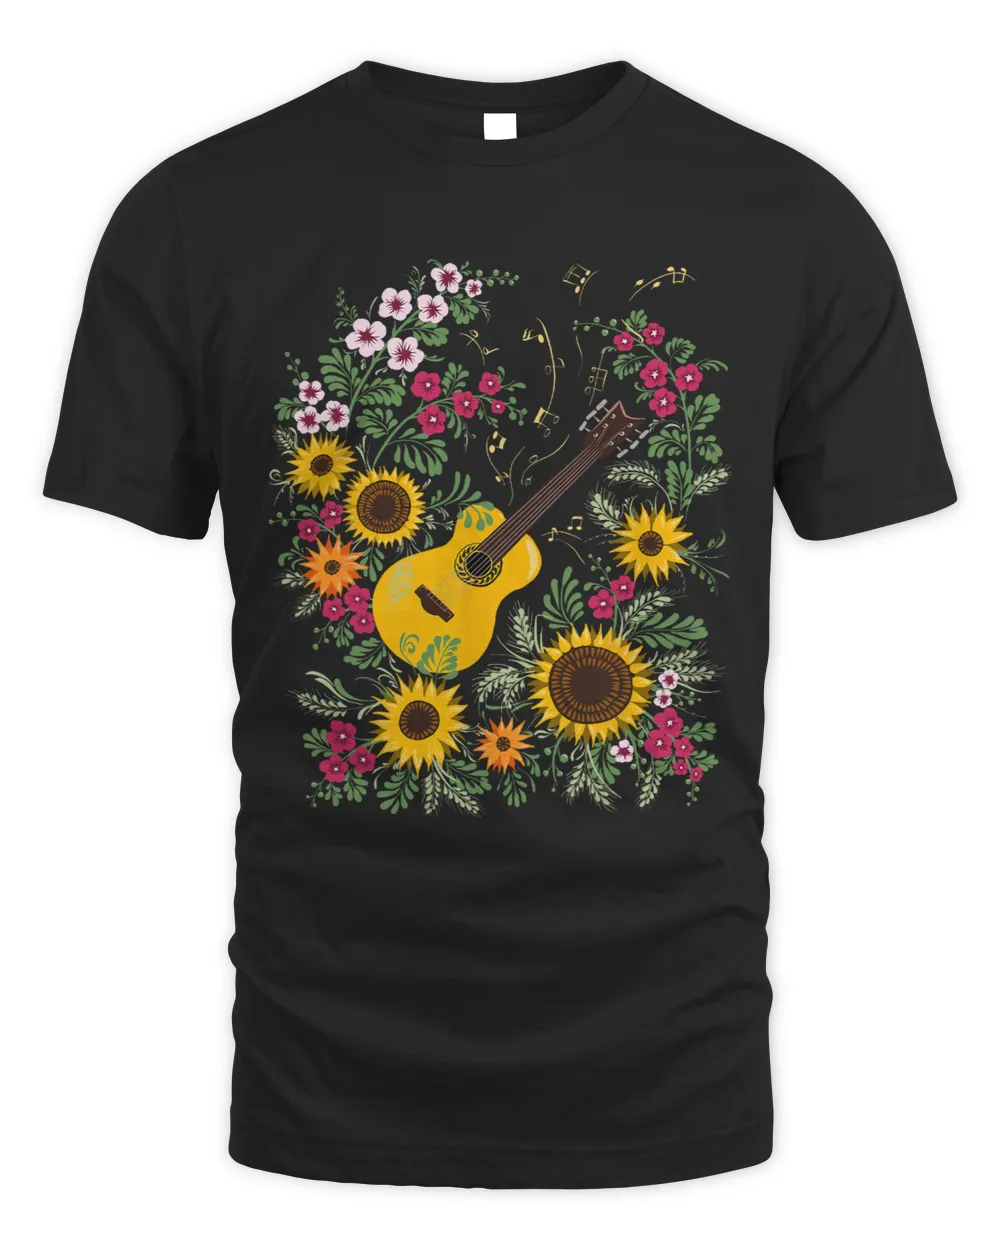 Acoustic Guitar Music Sunflowers Floral Ukrainian Vyshyvanka